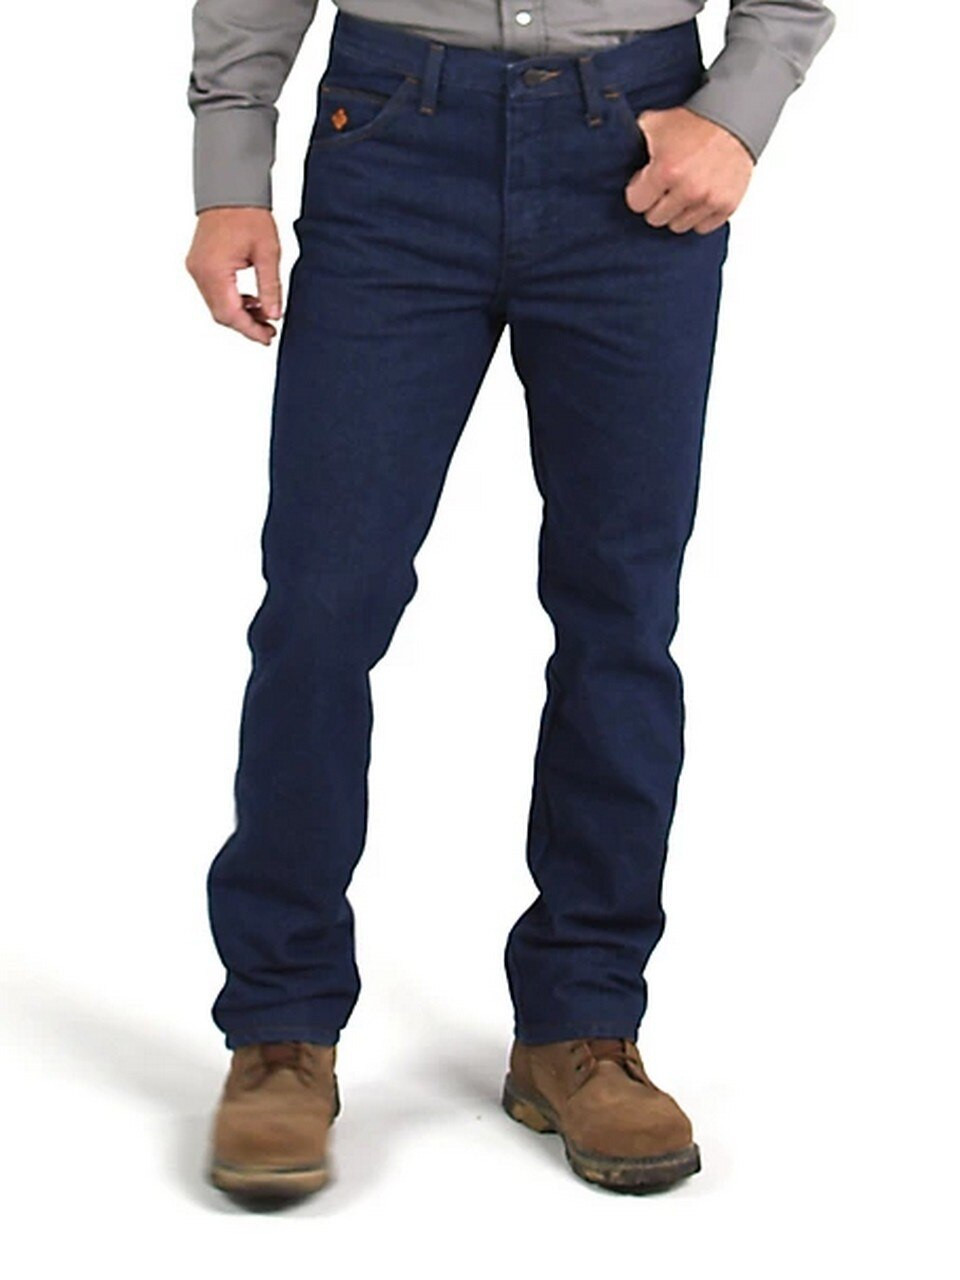 WranglerÂ® Men's FR Flame Resistant Slim Fit Jeans